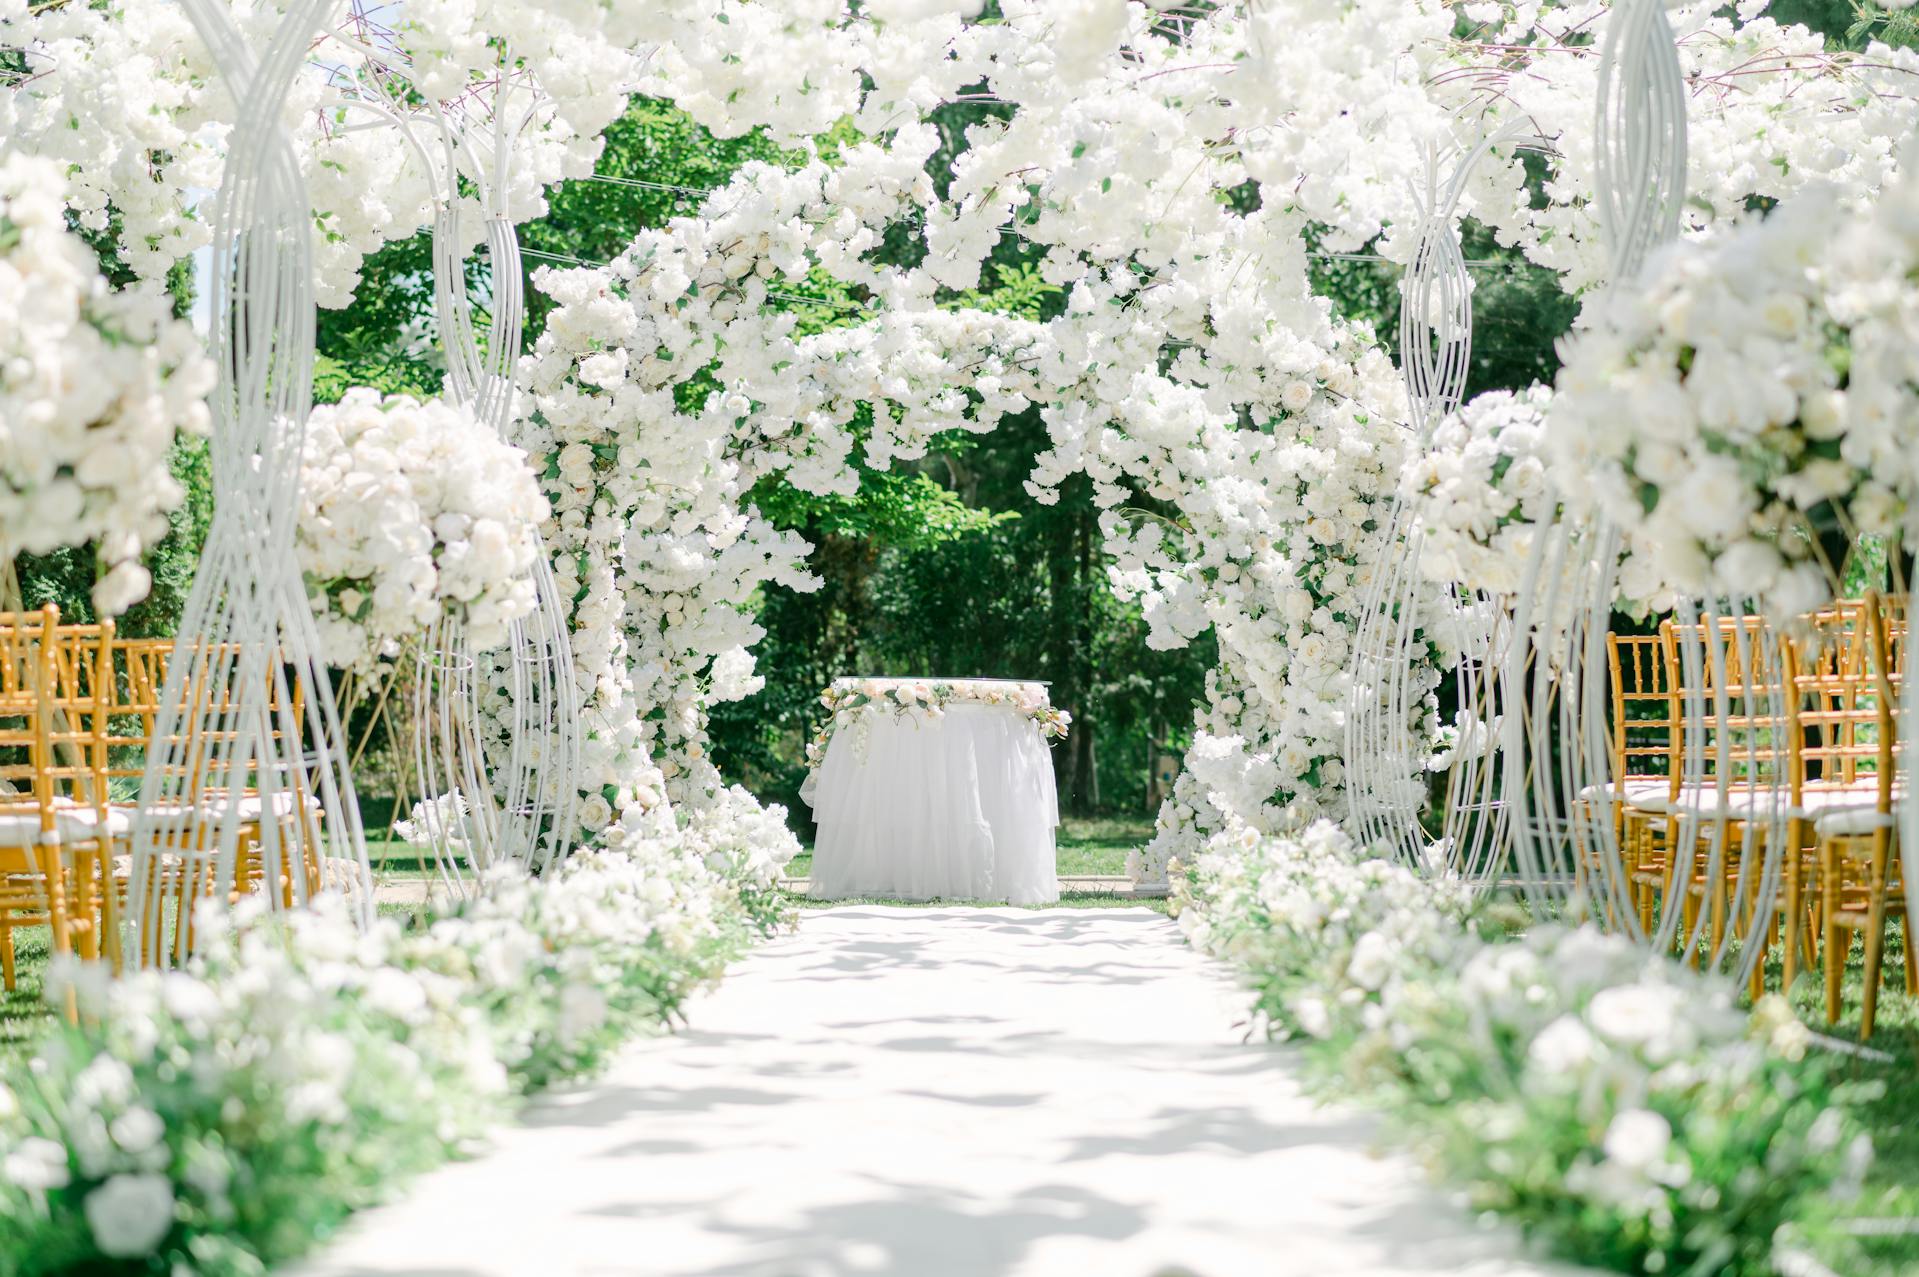 A wedding setup in a garden | Source: Pexels